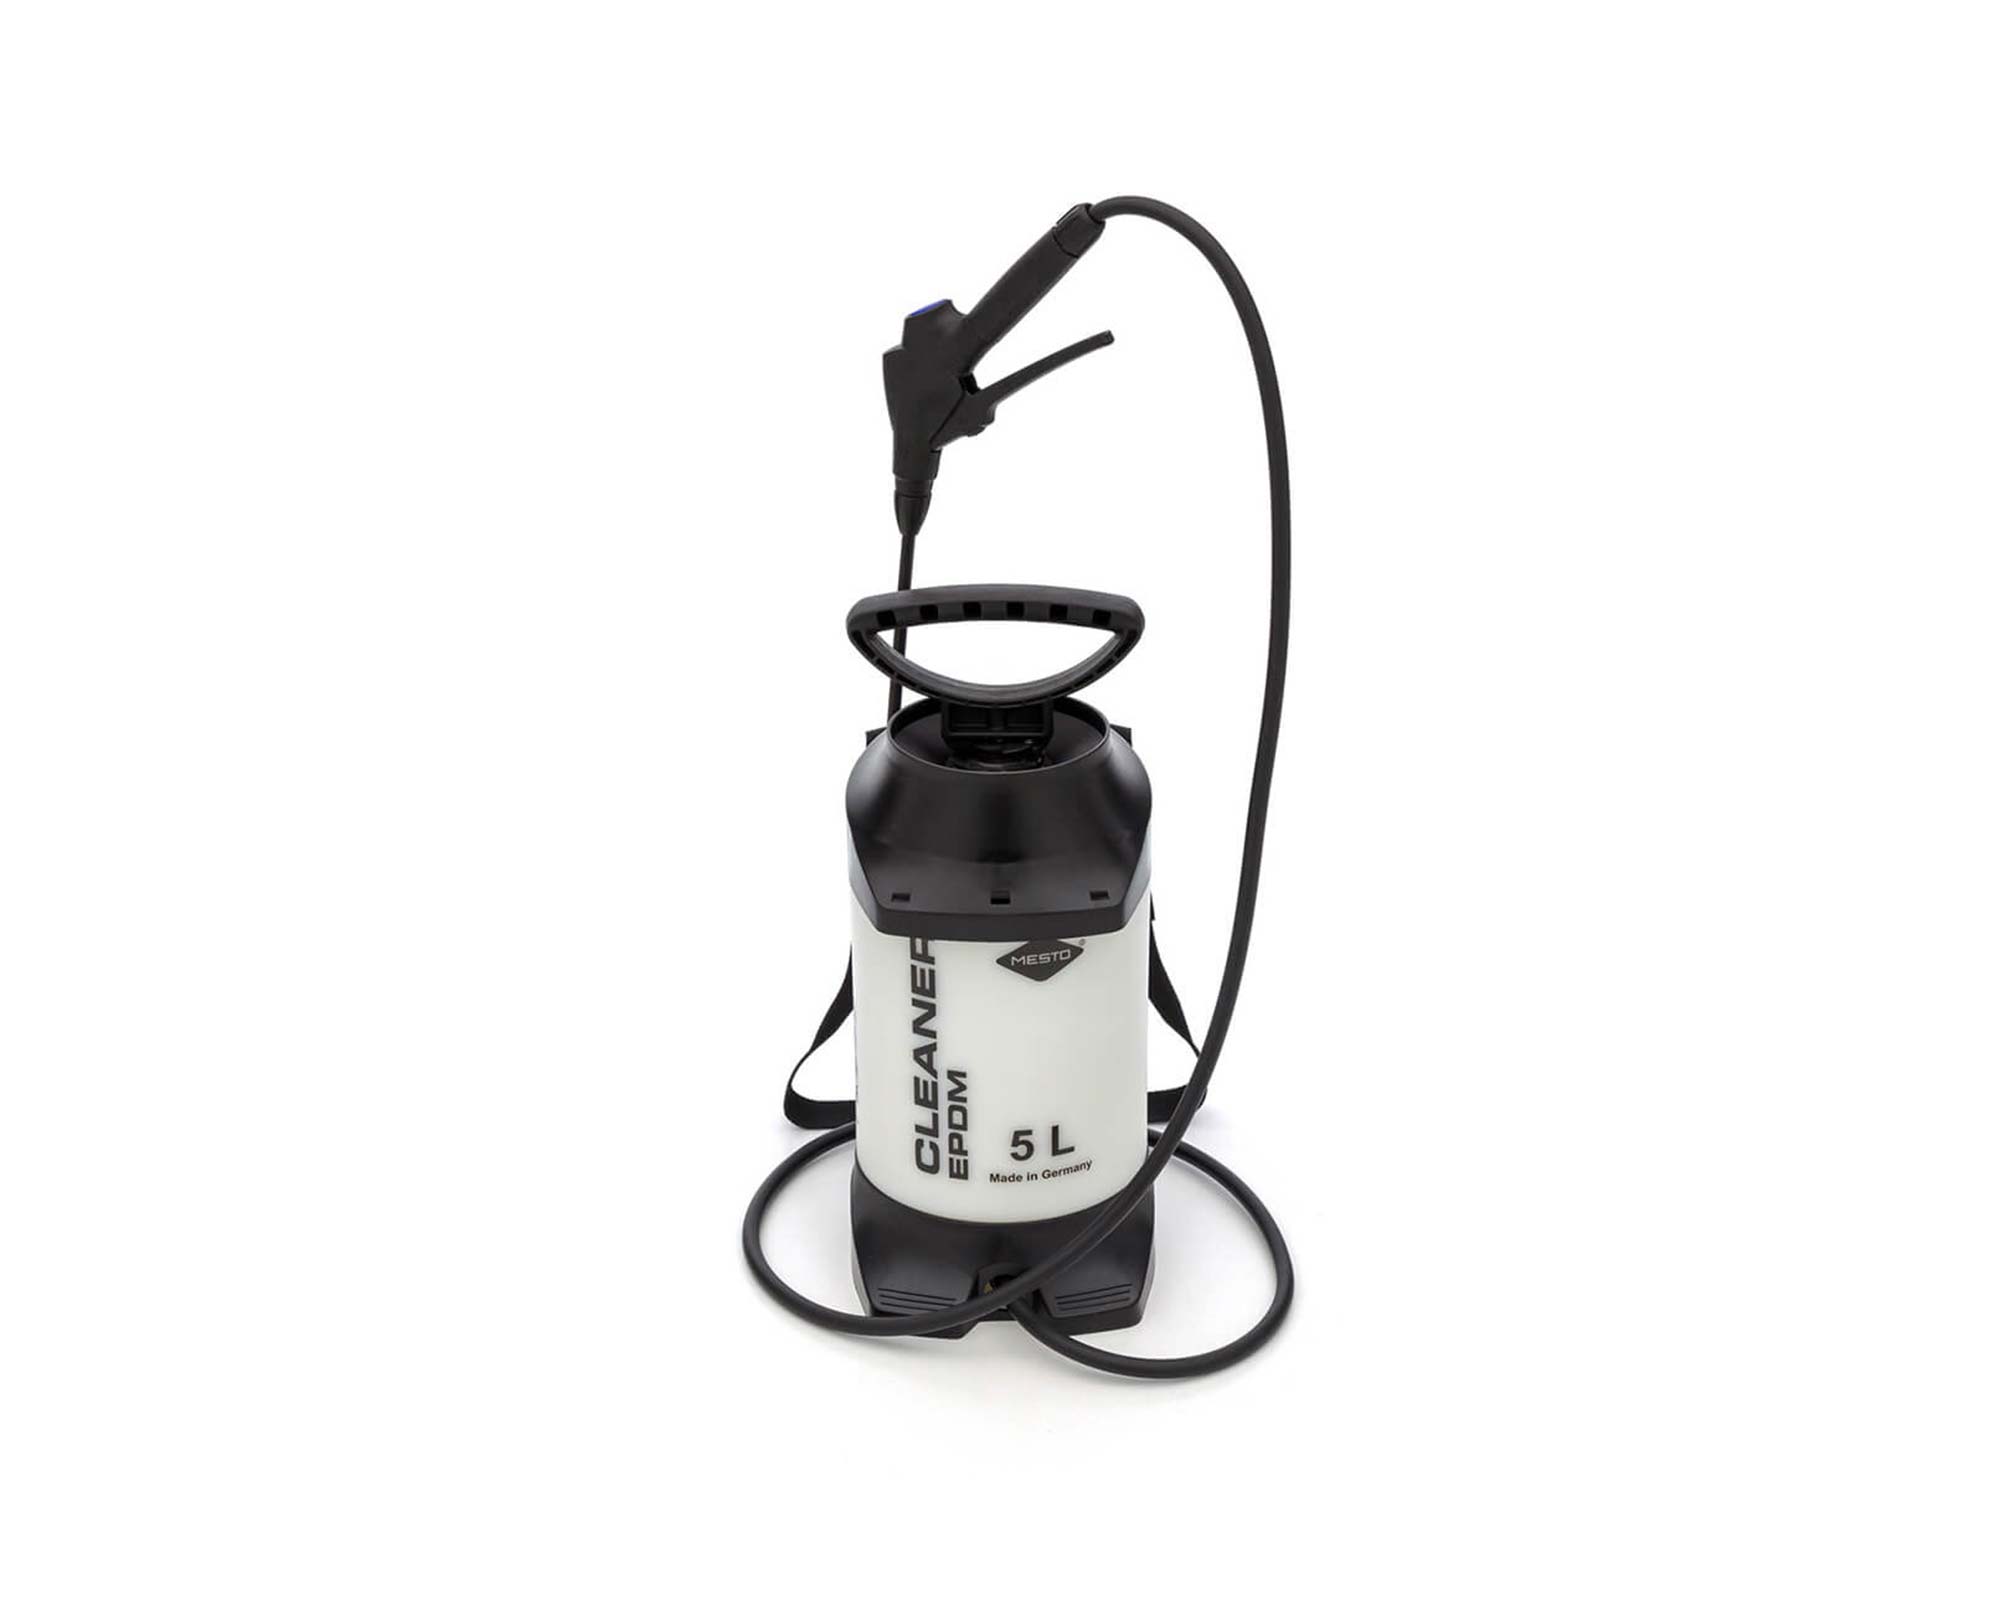 5 litre Cleaner pressure sprayer 3275PP by Mesto